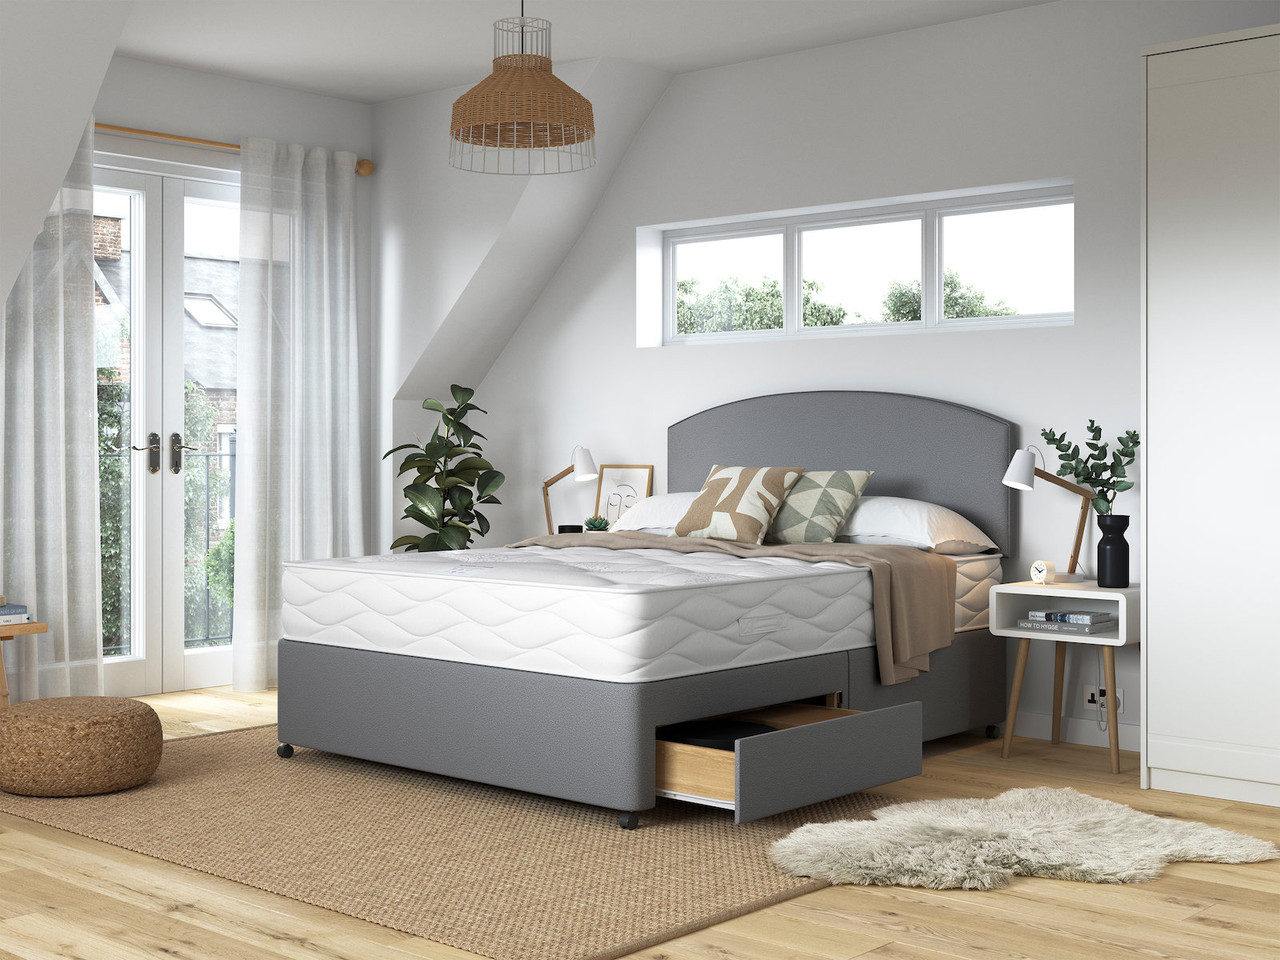 Pensilva Ortho Comfort Divan Bed Set in cool grey set in a contemporary bedroom design